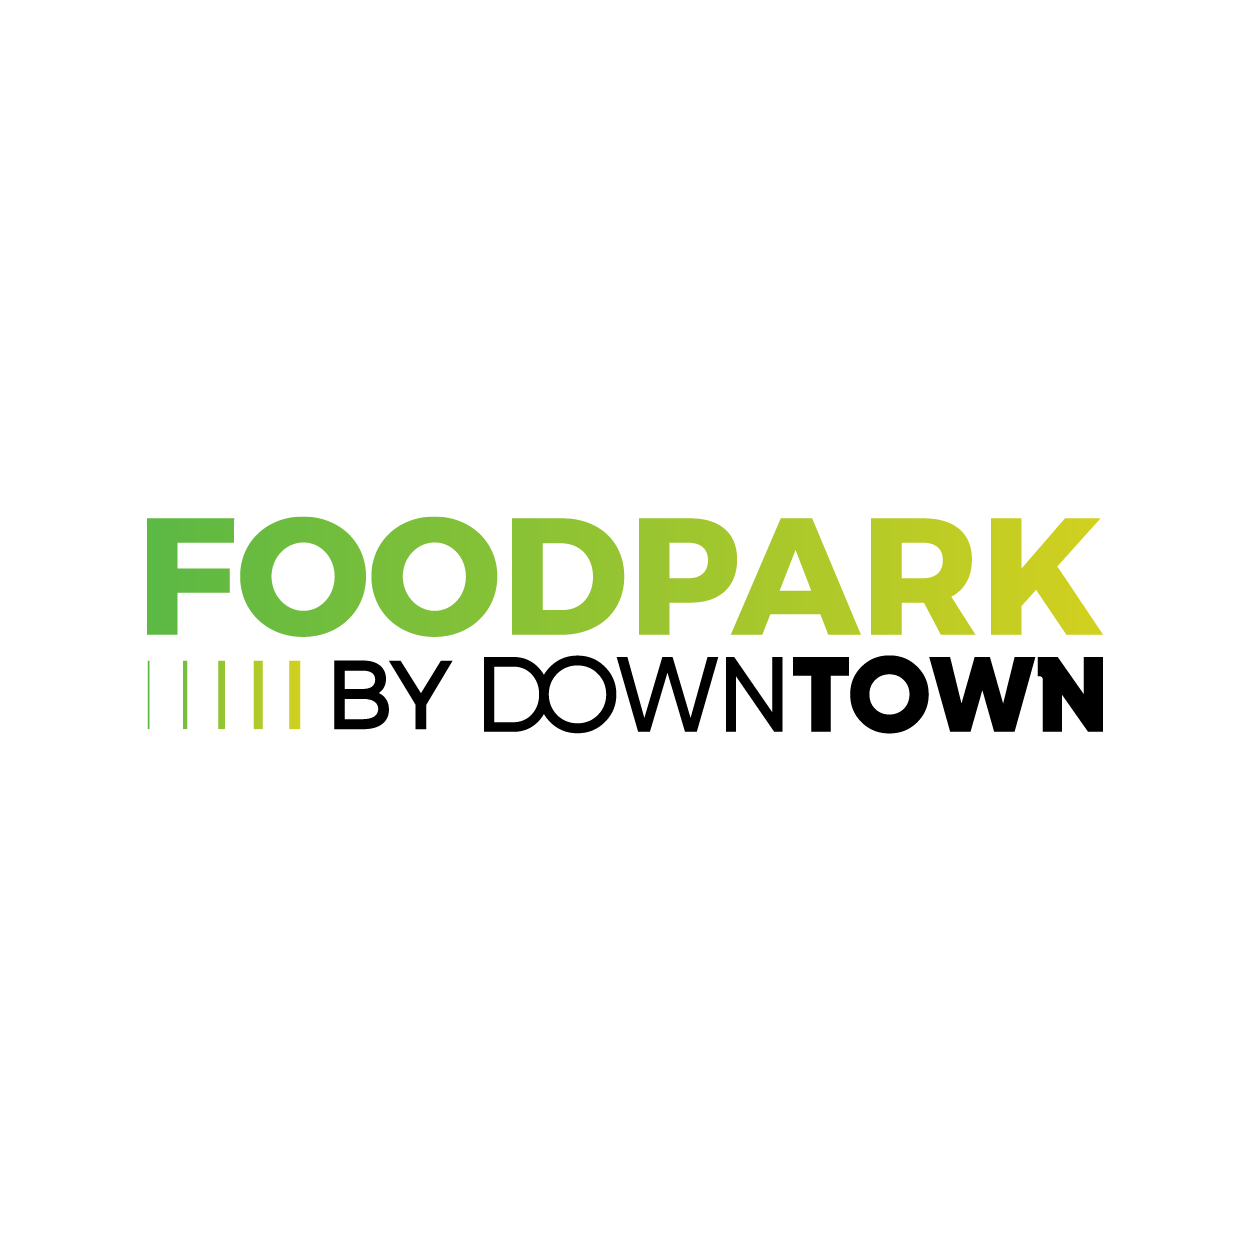 foodpark for website slidet 300x300-01-01